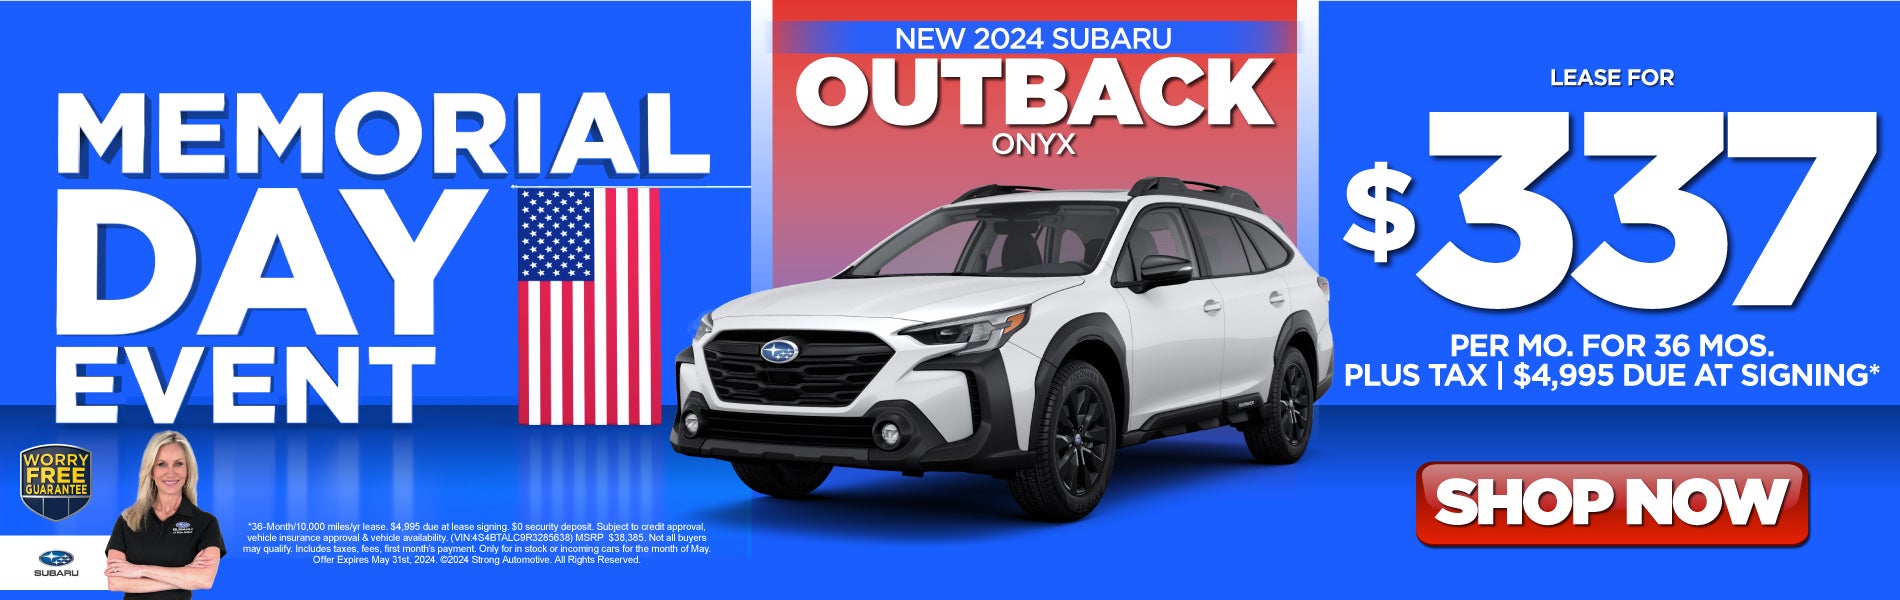 New 2024 Subaru Outback Onyx - $337/mo* - Shop Now